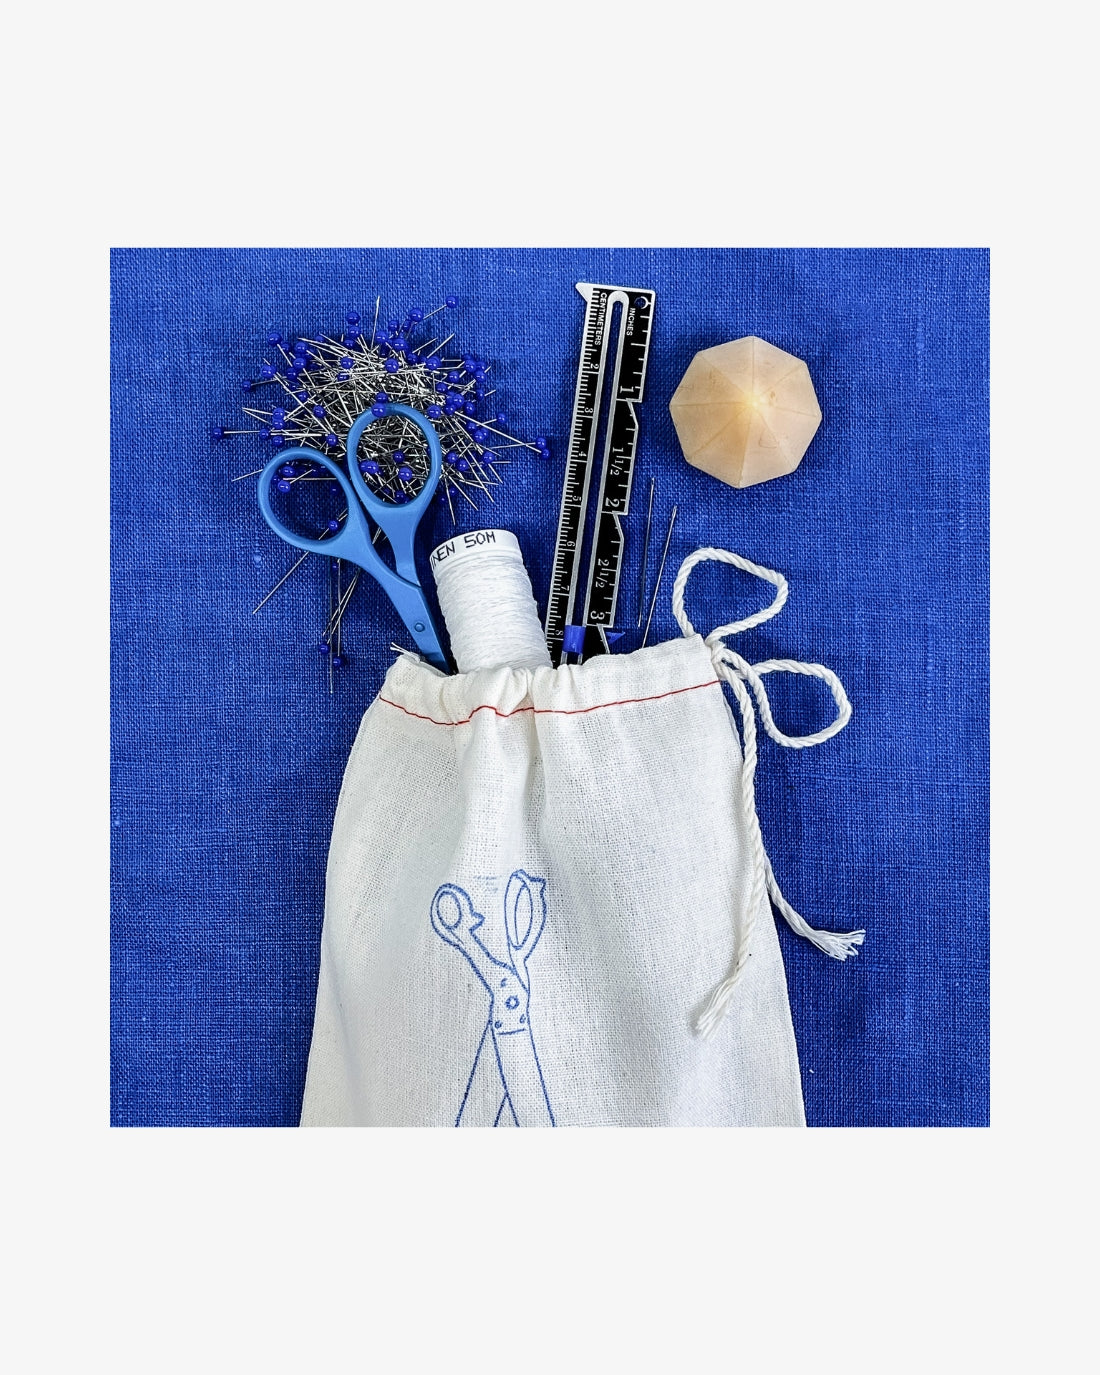 Beginner Hand Sewing Materials Kit